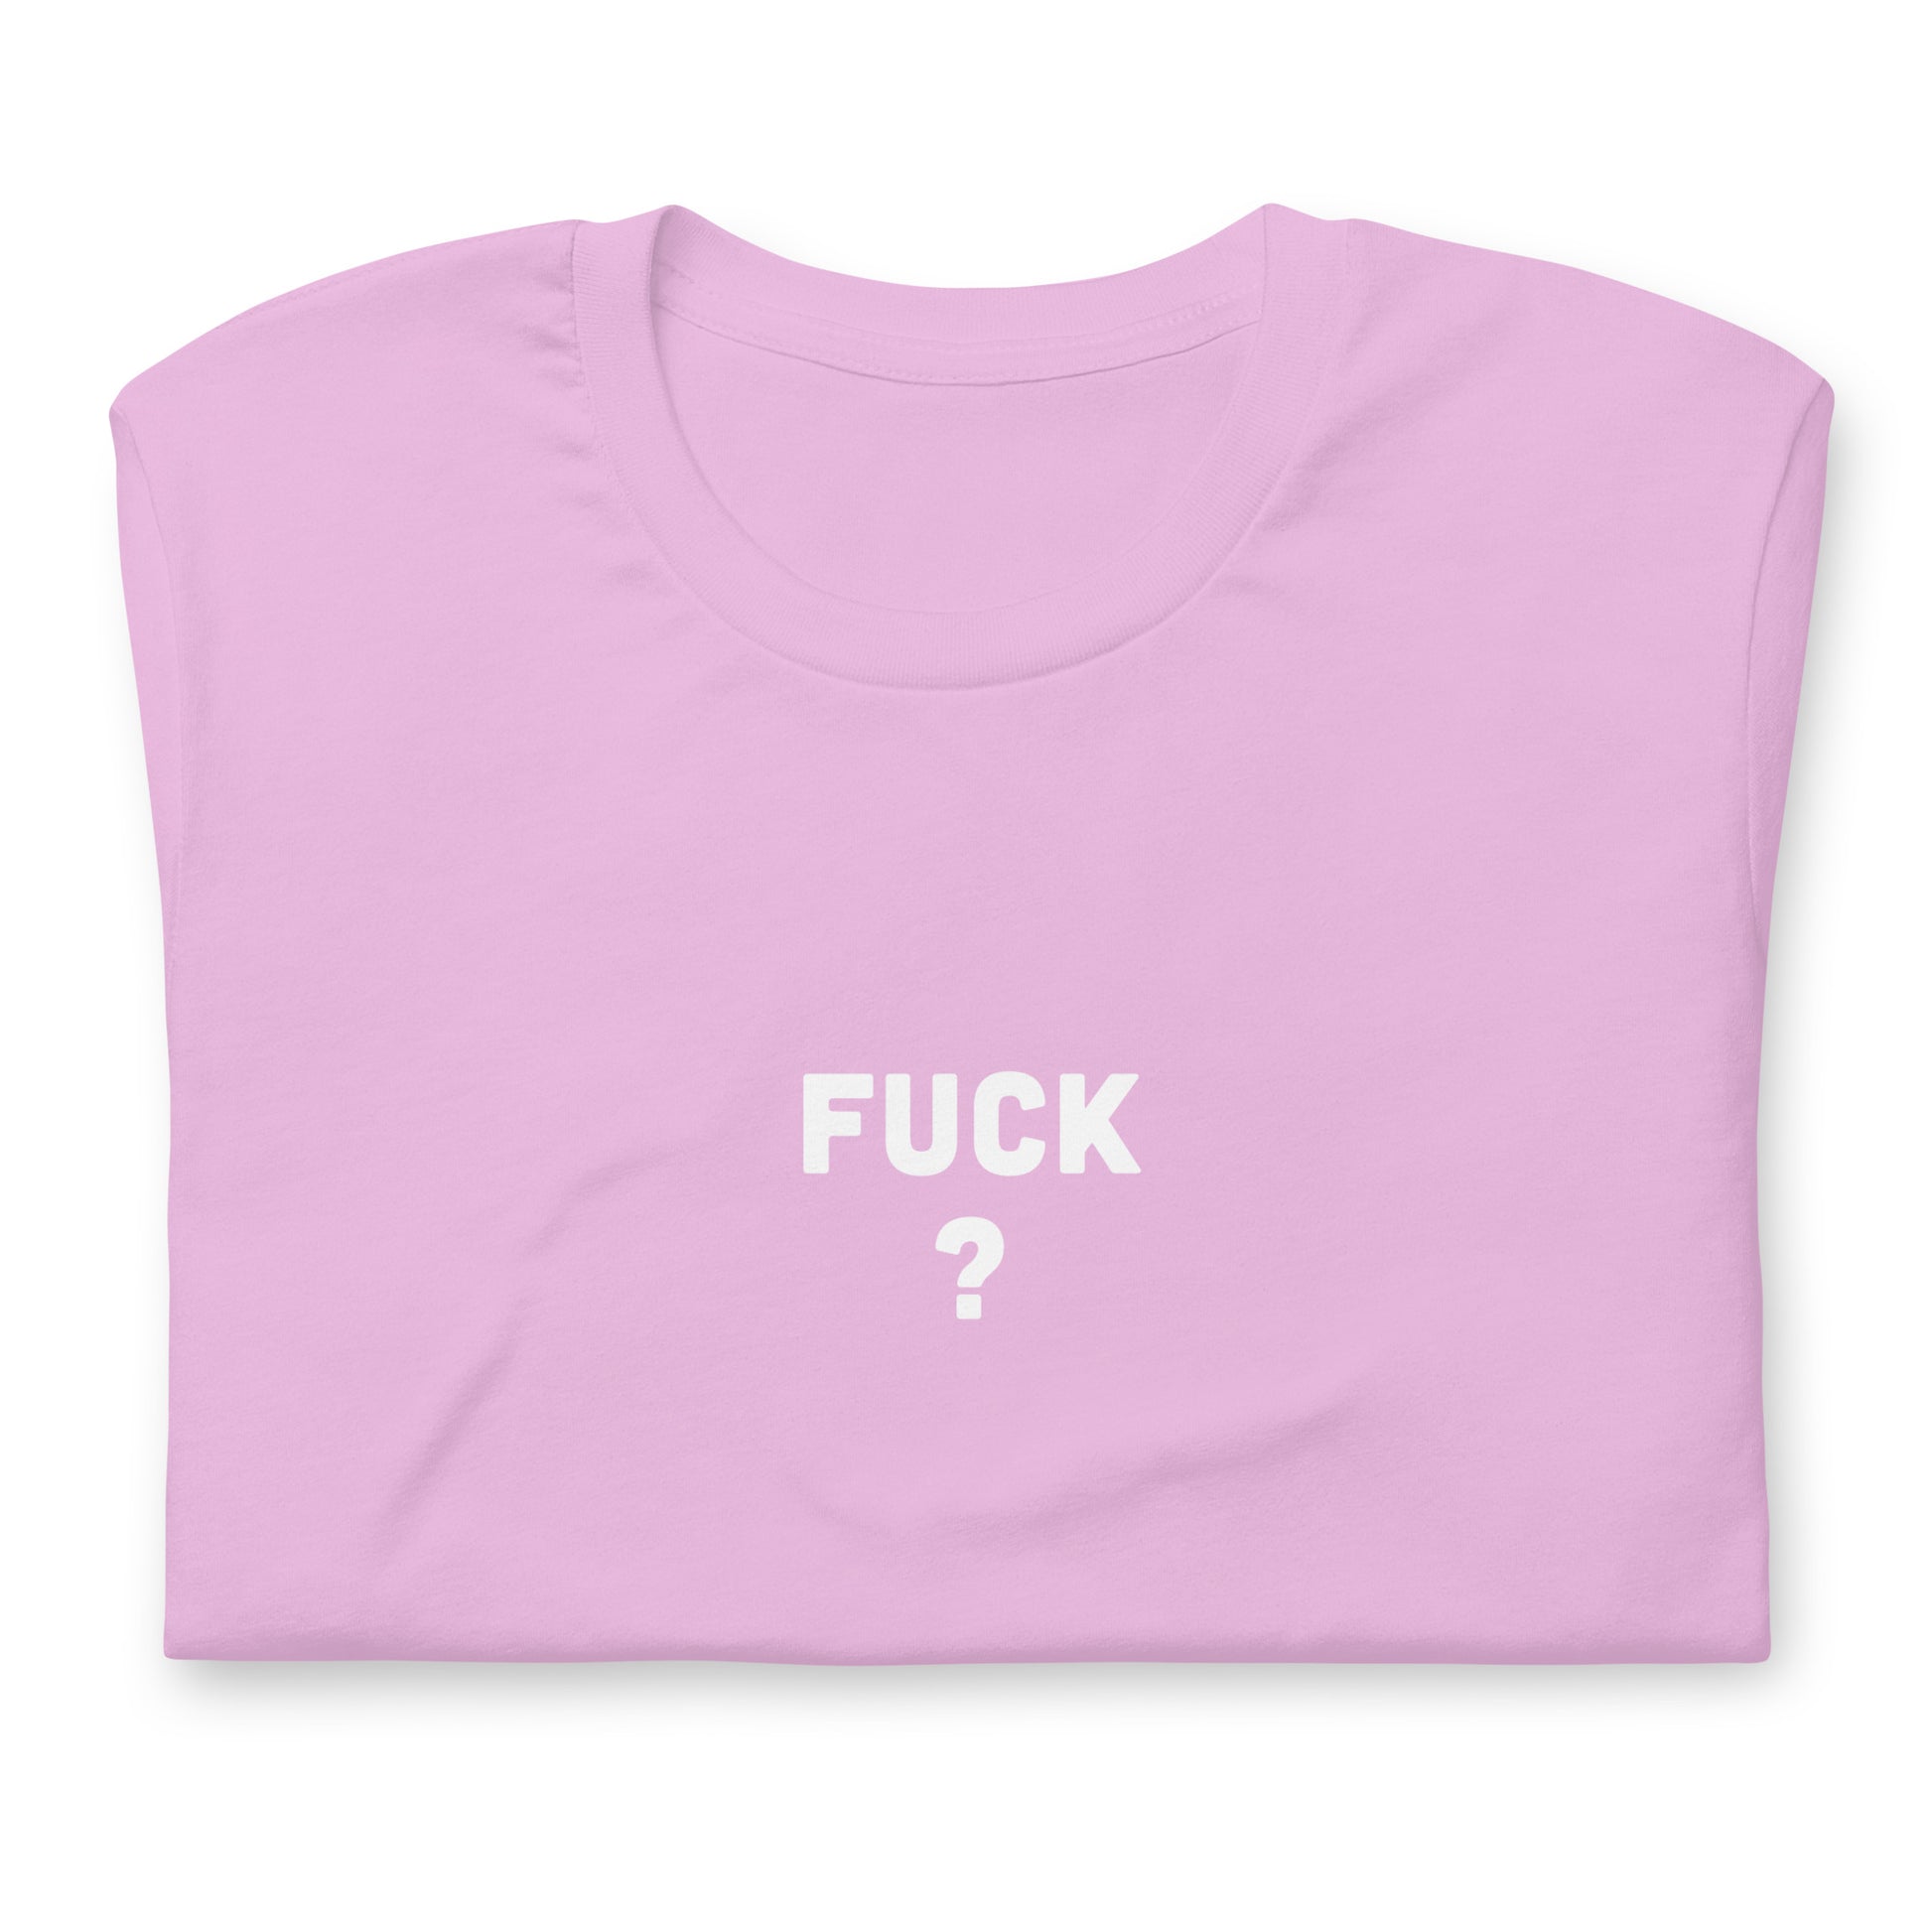 Fuck T-Shirt Size 2XL Color Forest